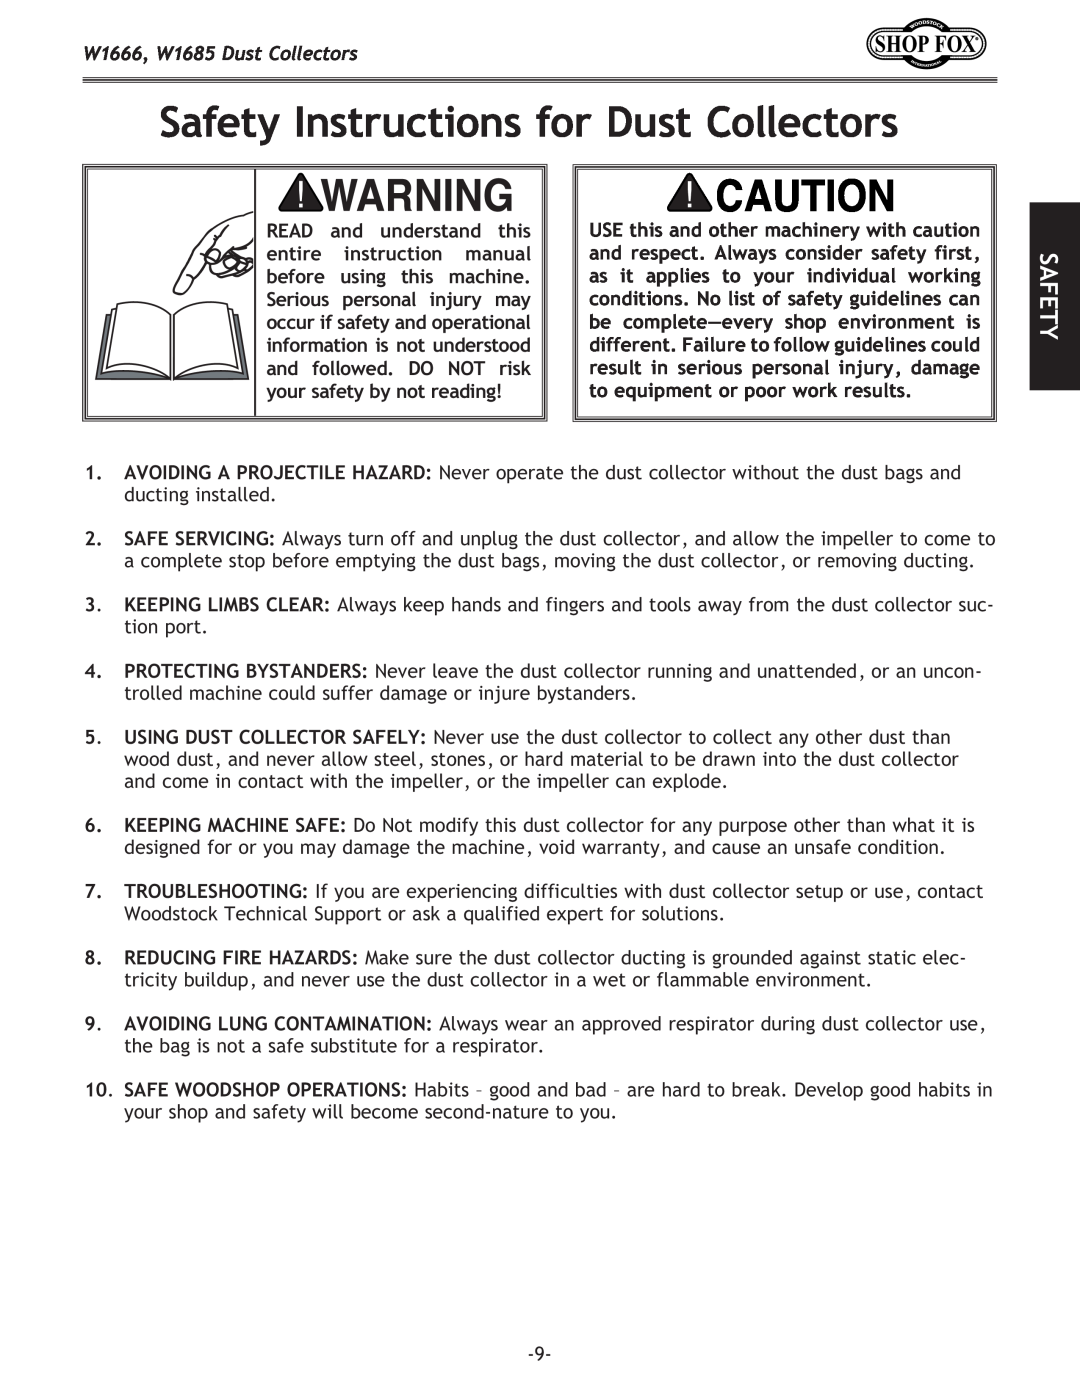 Woodstock DUST COLLECTORS instruction manual Safety Instructions for Dust Collectors, W1666, W1685 Dust Collectors 